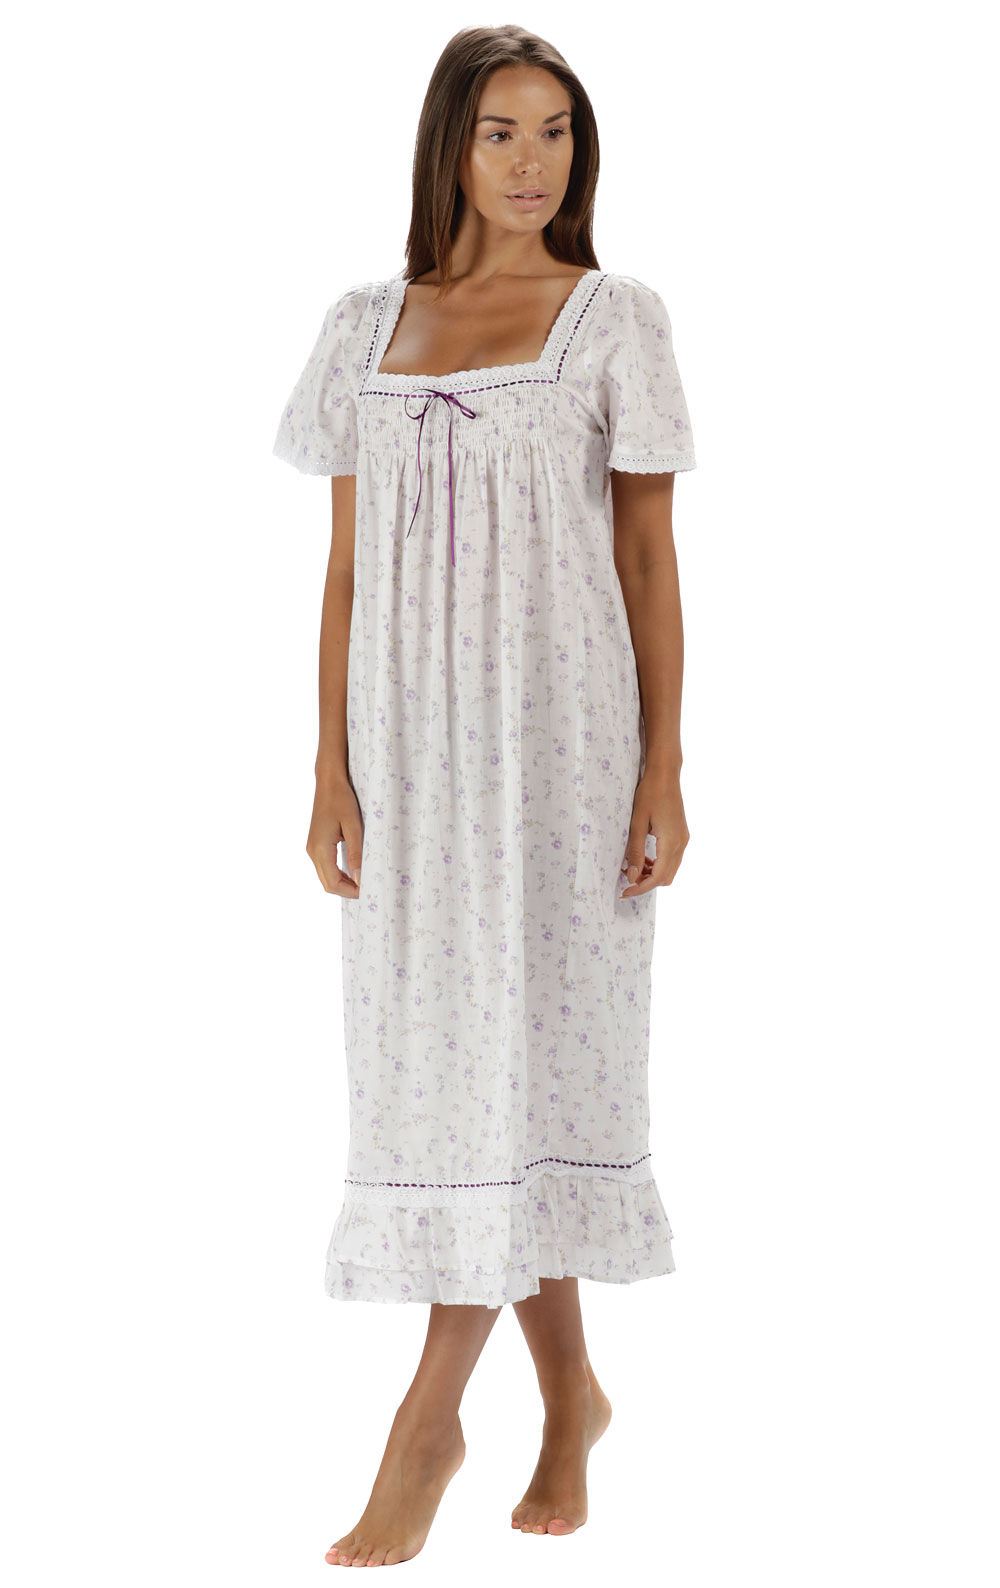 Elizabeth The 1 for U 100% Cotton Short Sleeve Ladies Nightdress 6 Sizes